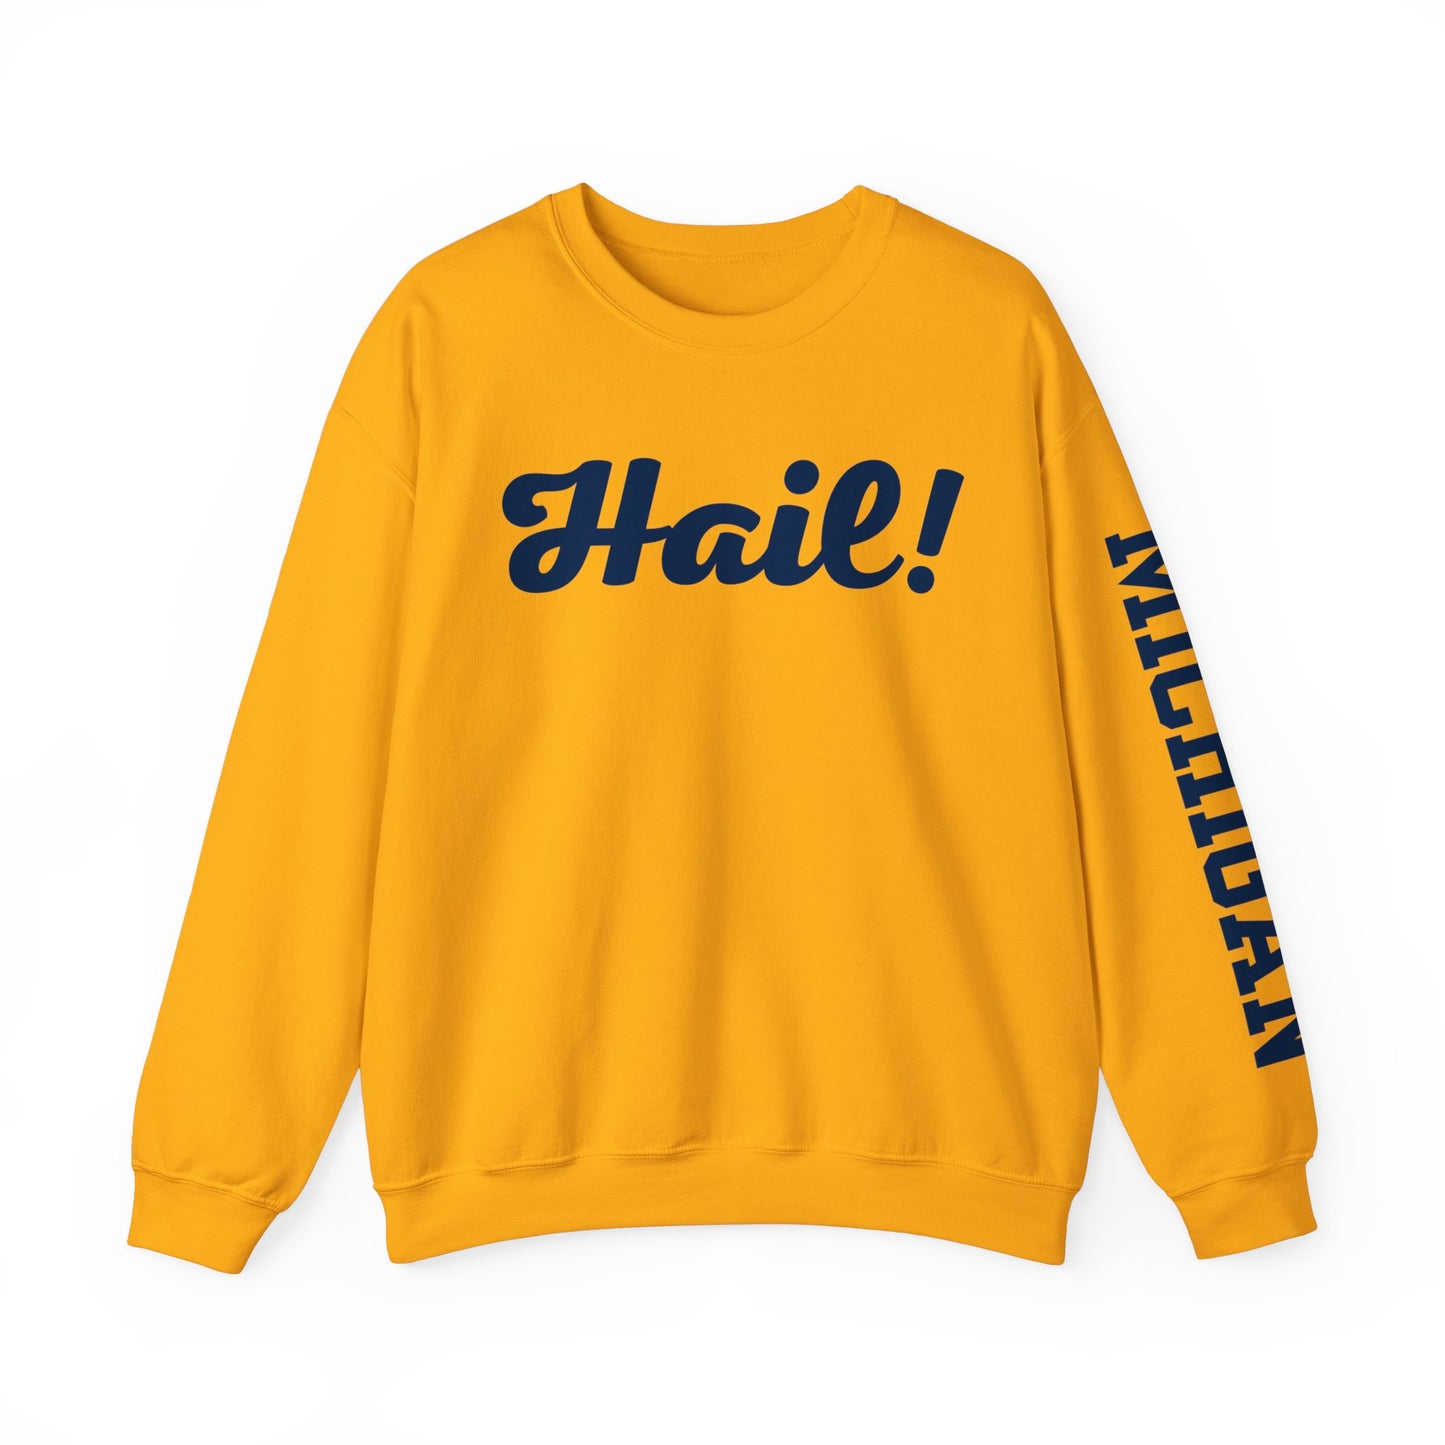 Michigan Hail Sweatshirt in Gold with Sleeve Print